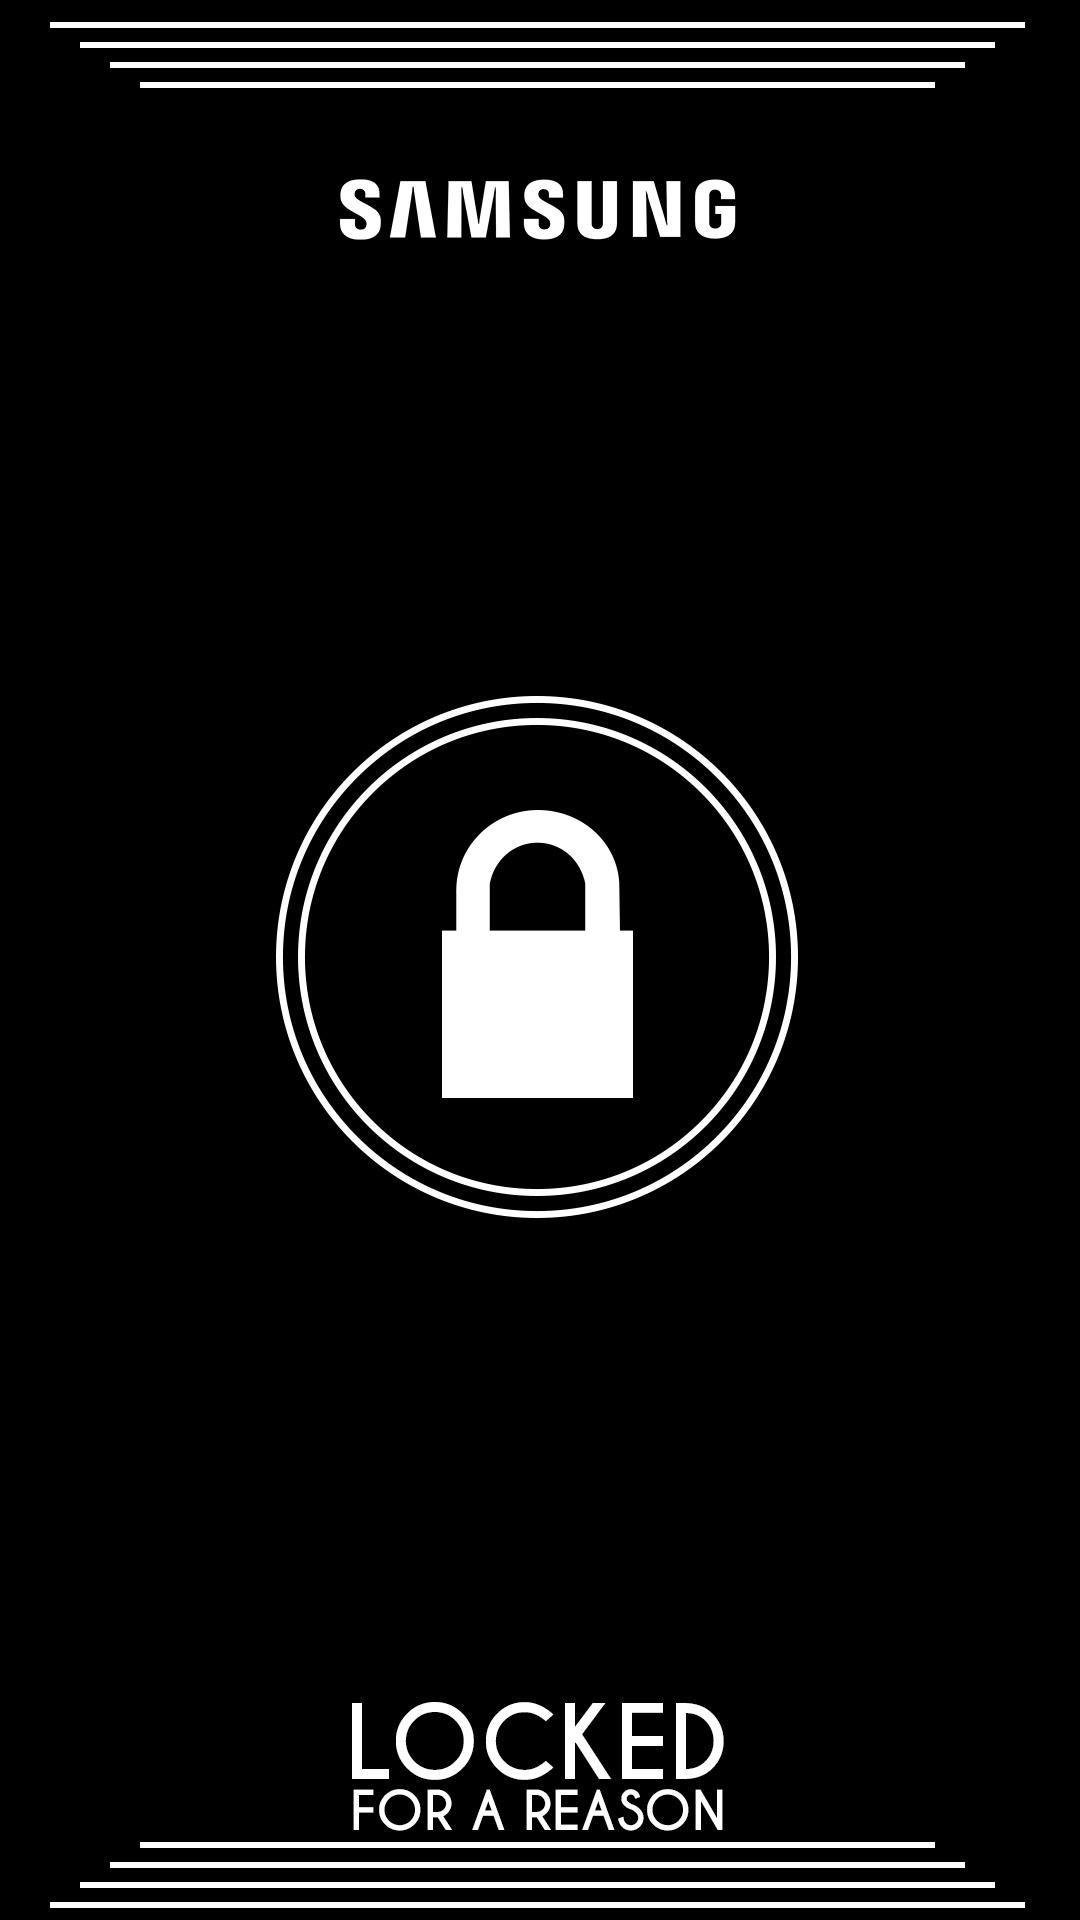 Samsung Lockscreen - Locked For A Reason